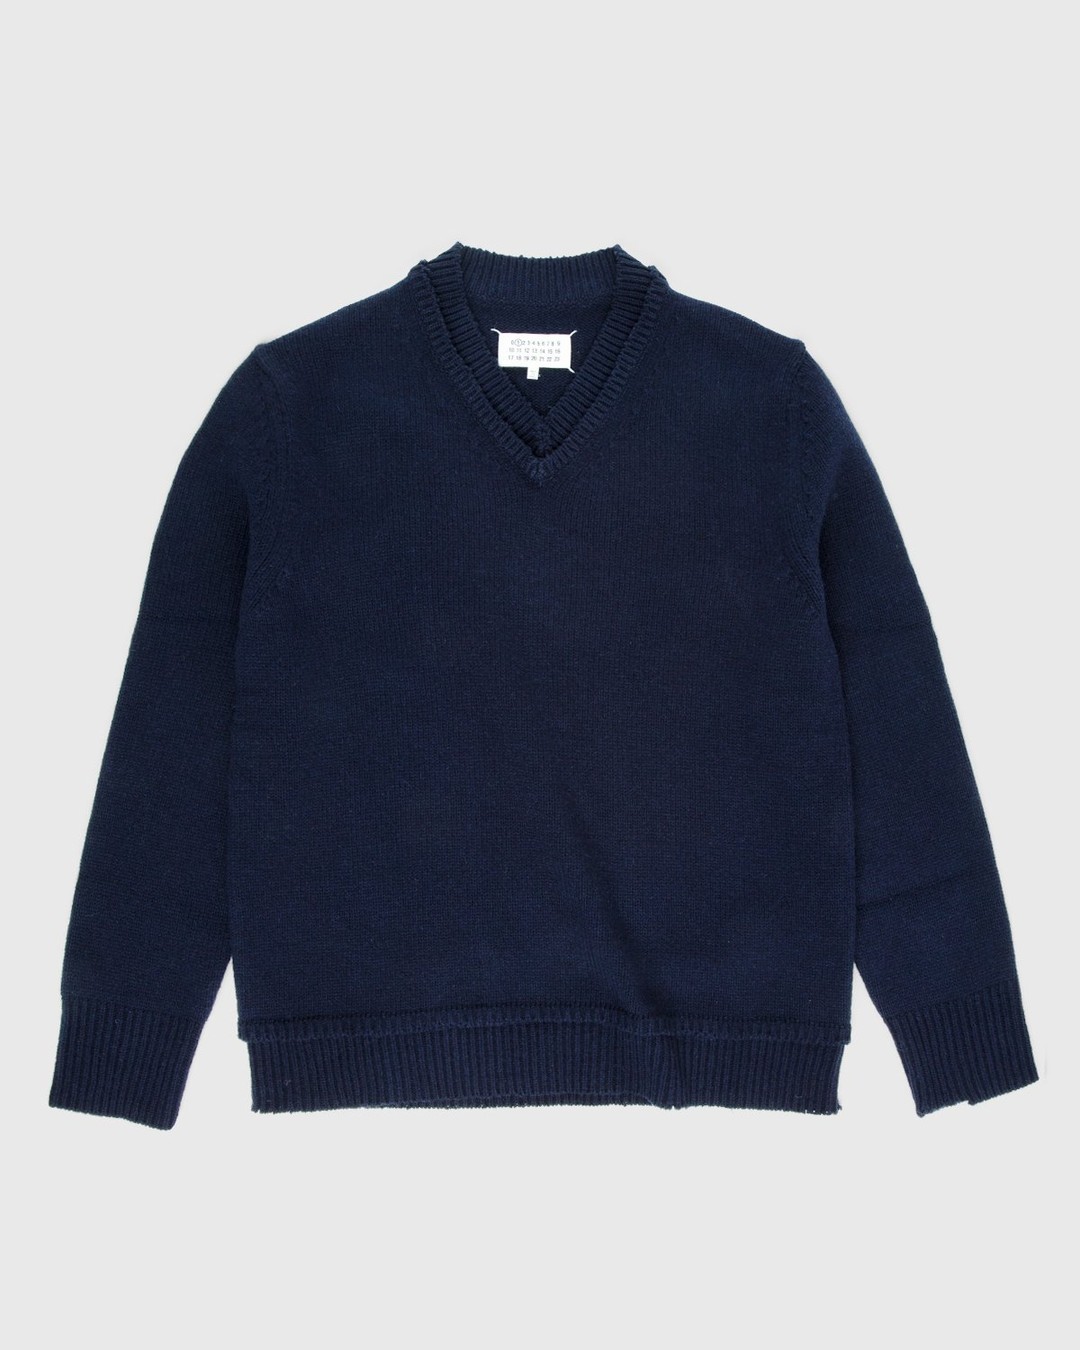 Maison Margiela – Sweater Navy - V-Necks Knitwear - Blue - Image 1